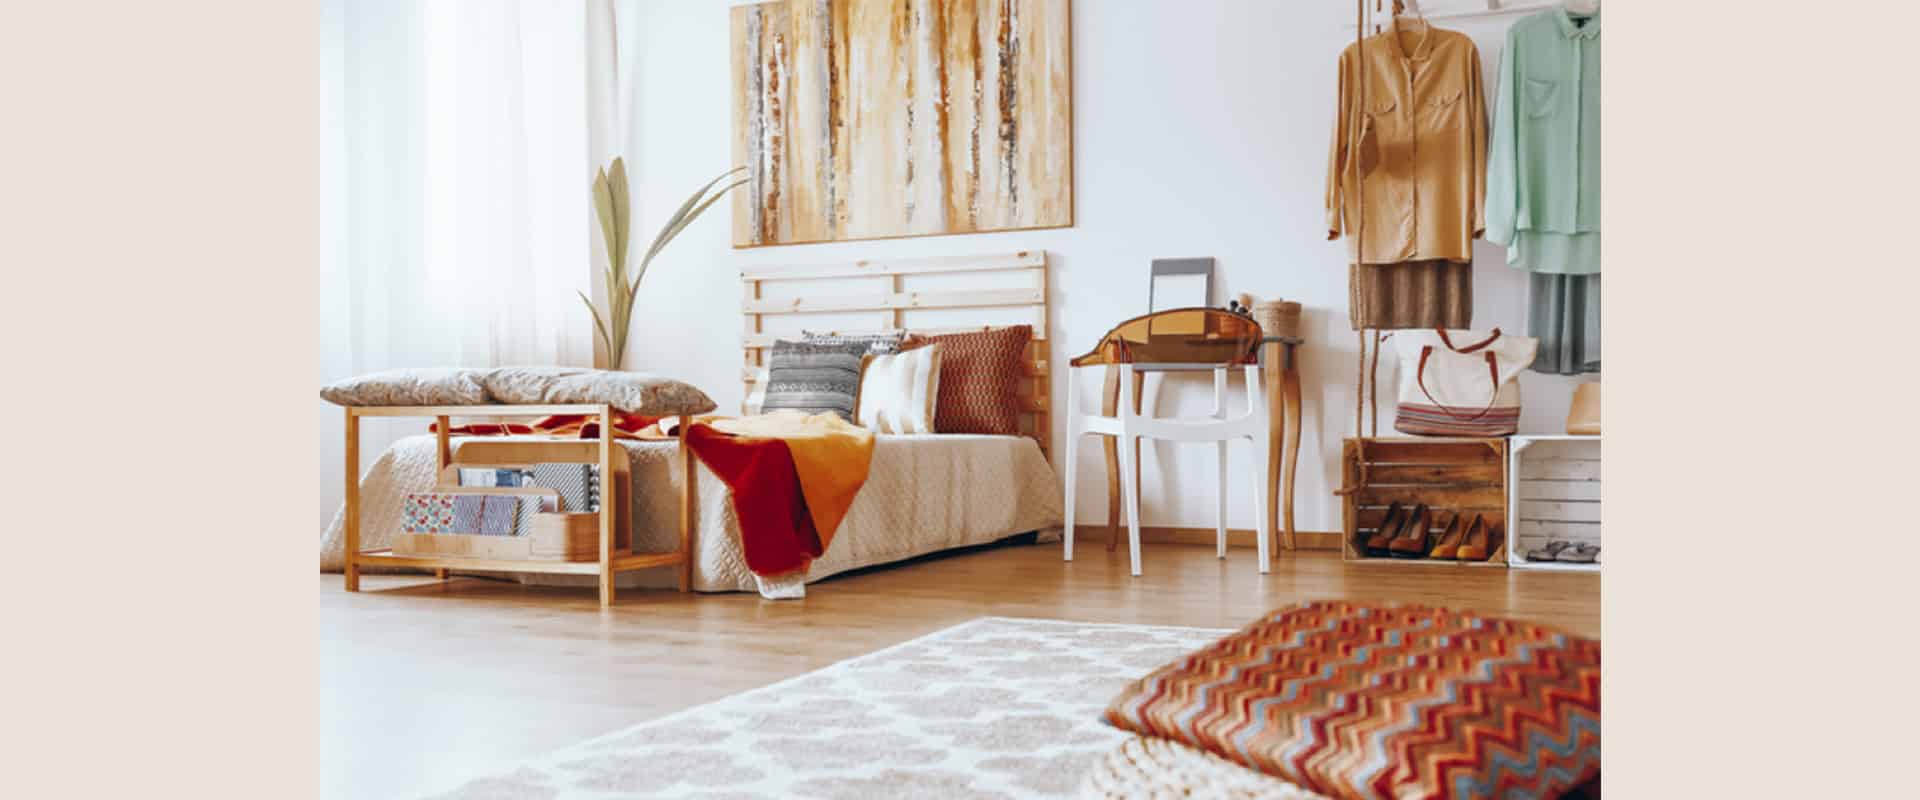 Celebrate your Culture Through Home Interior Design